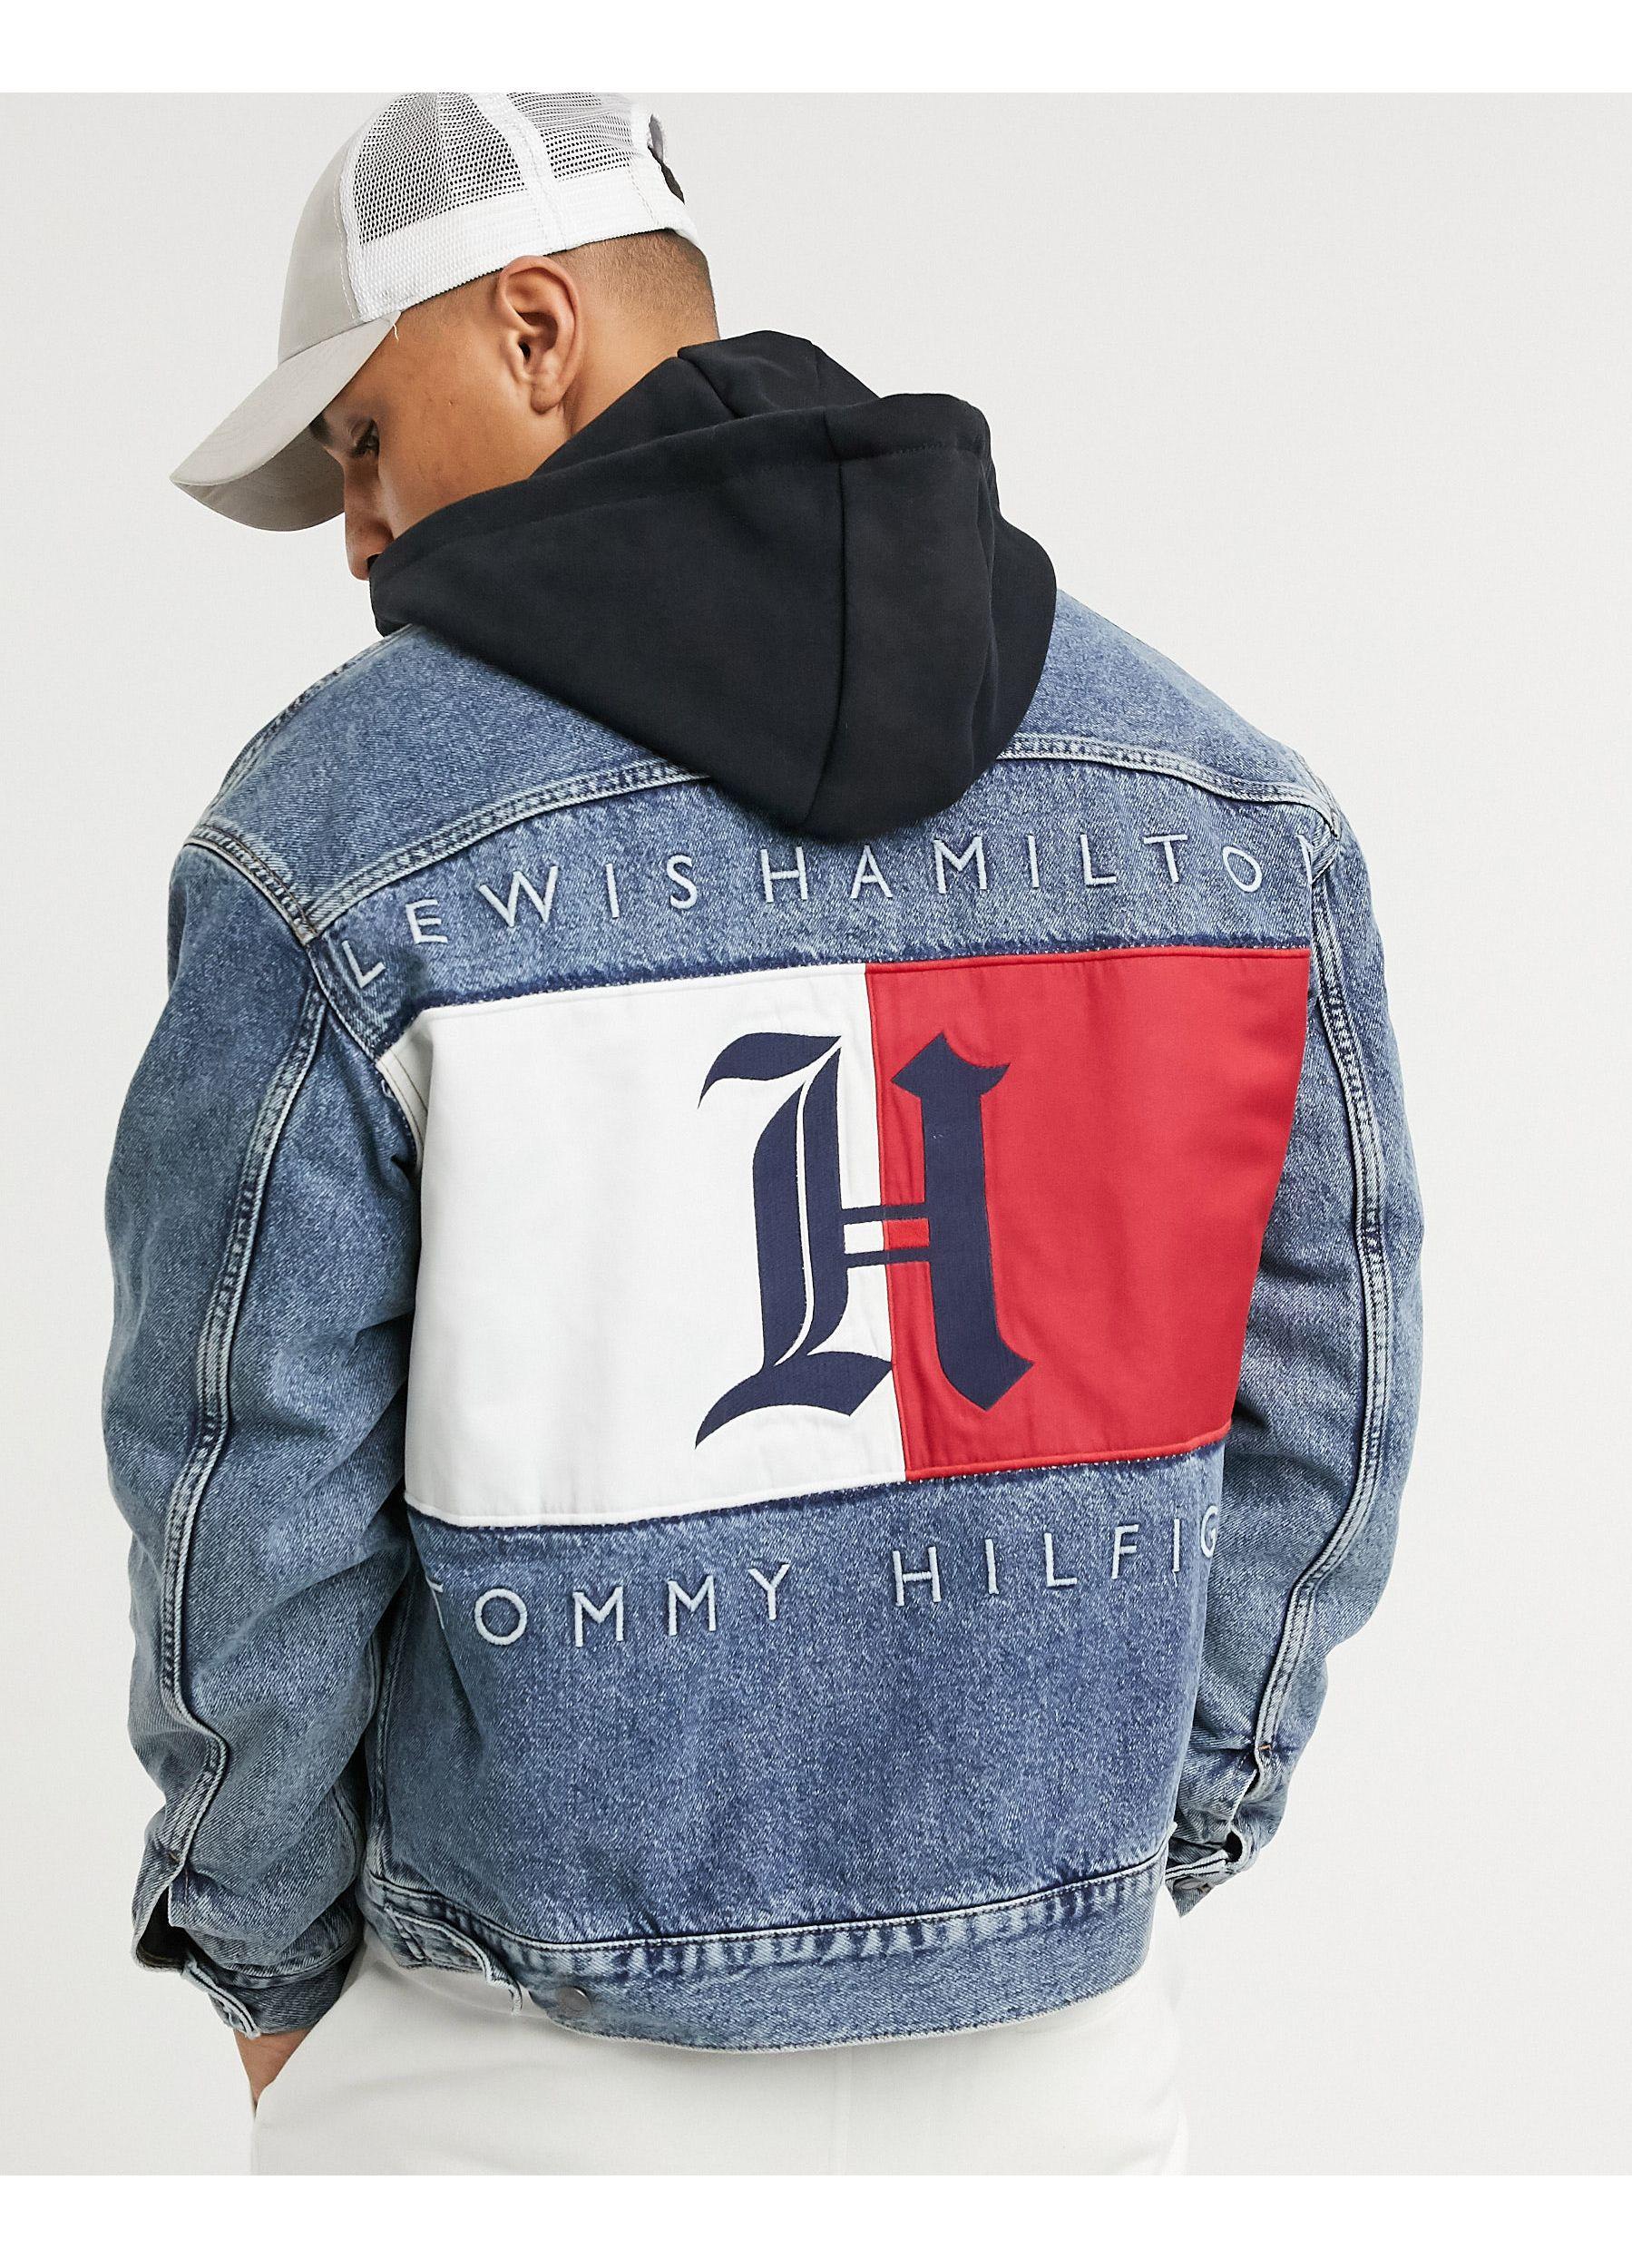 Tommy Hilfiger X Lewis Hamilton Back Logo Oversized Hooded Denim Jacket in  Indigo Denim (Blue) for Men - Lyst